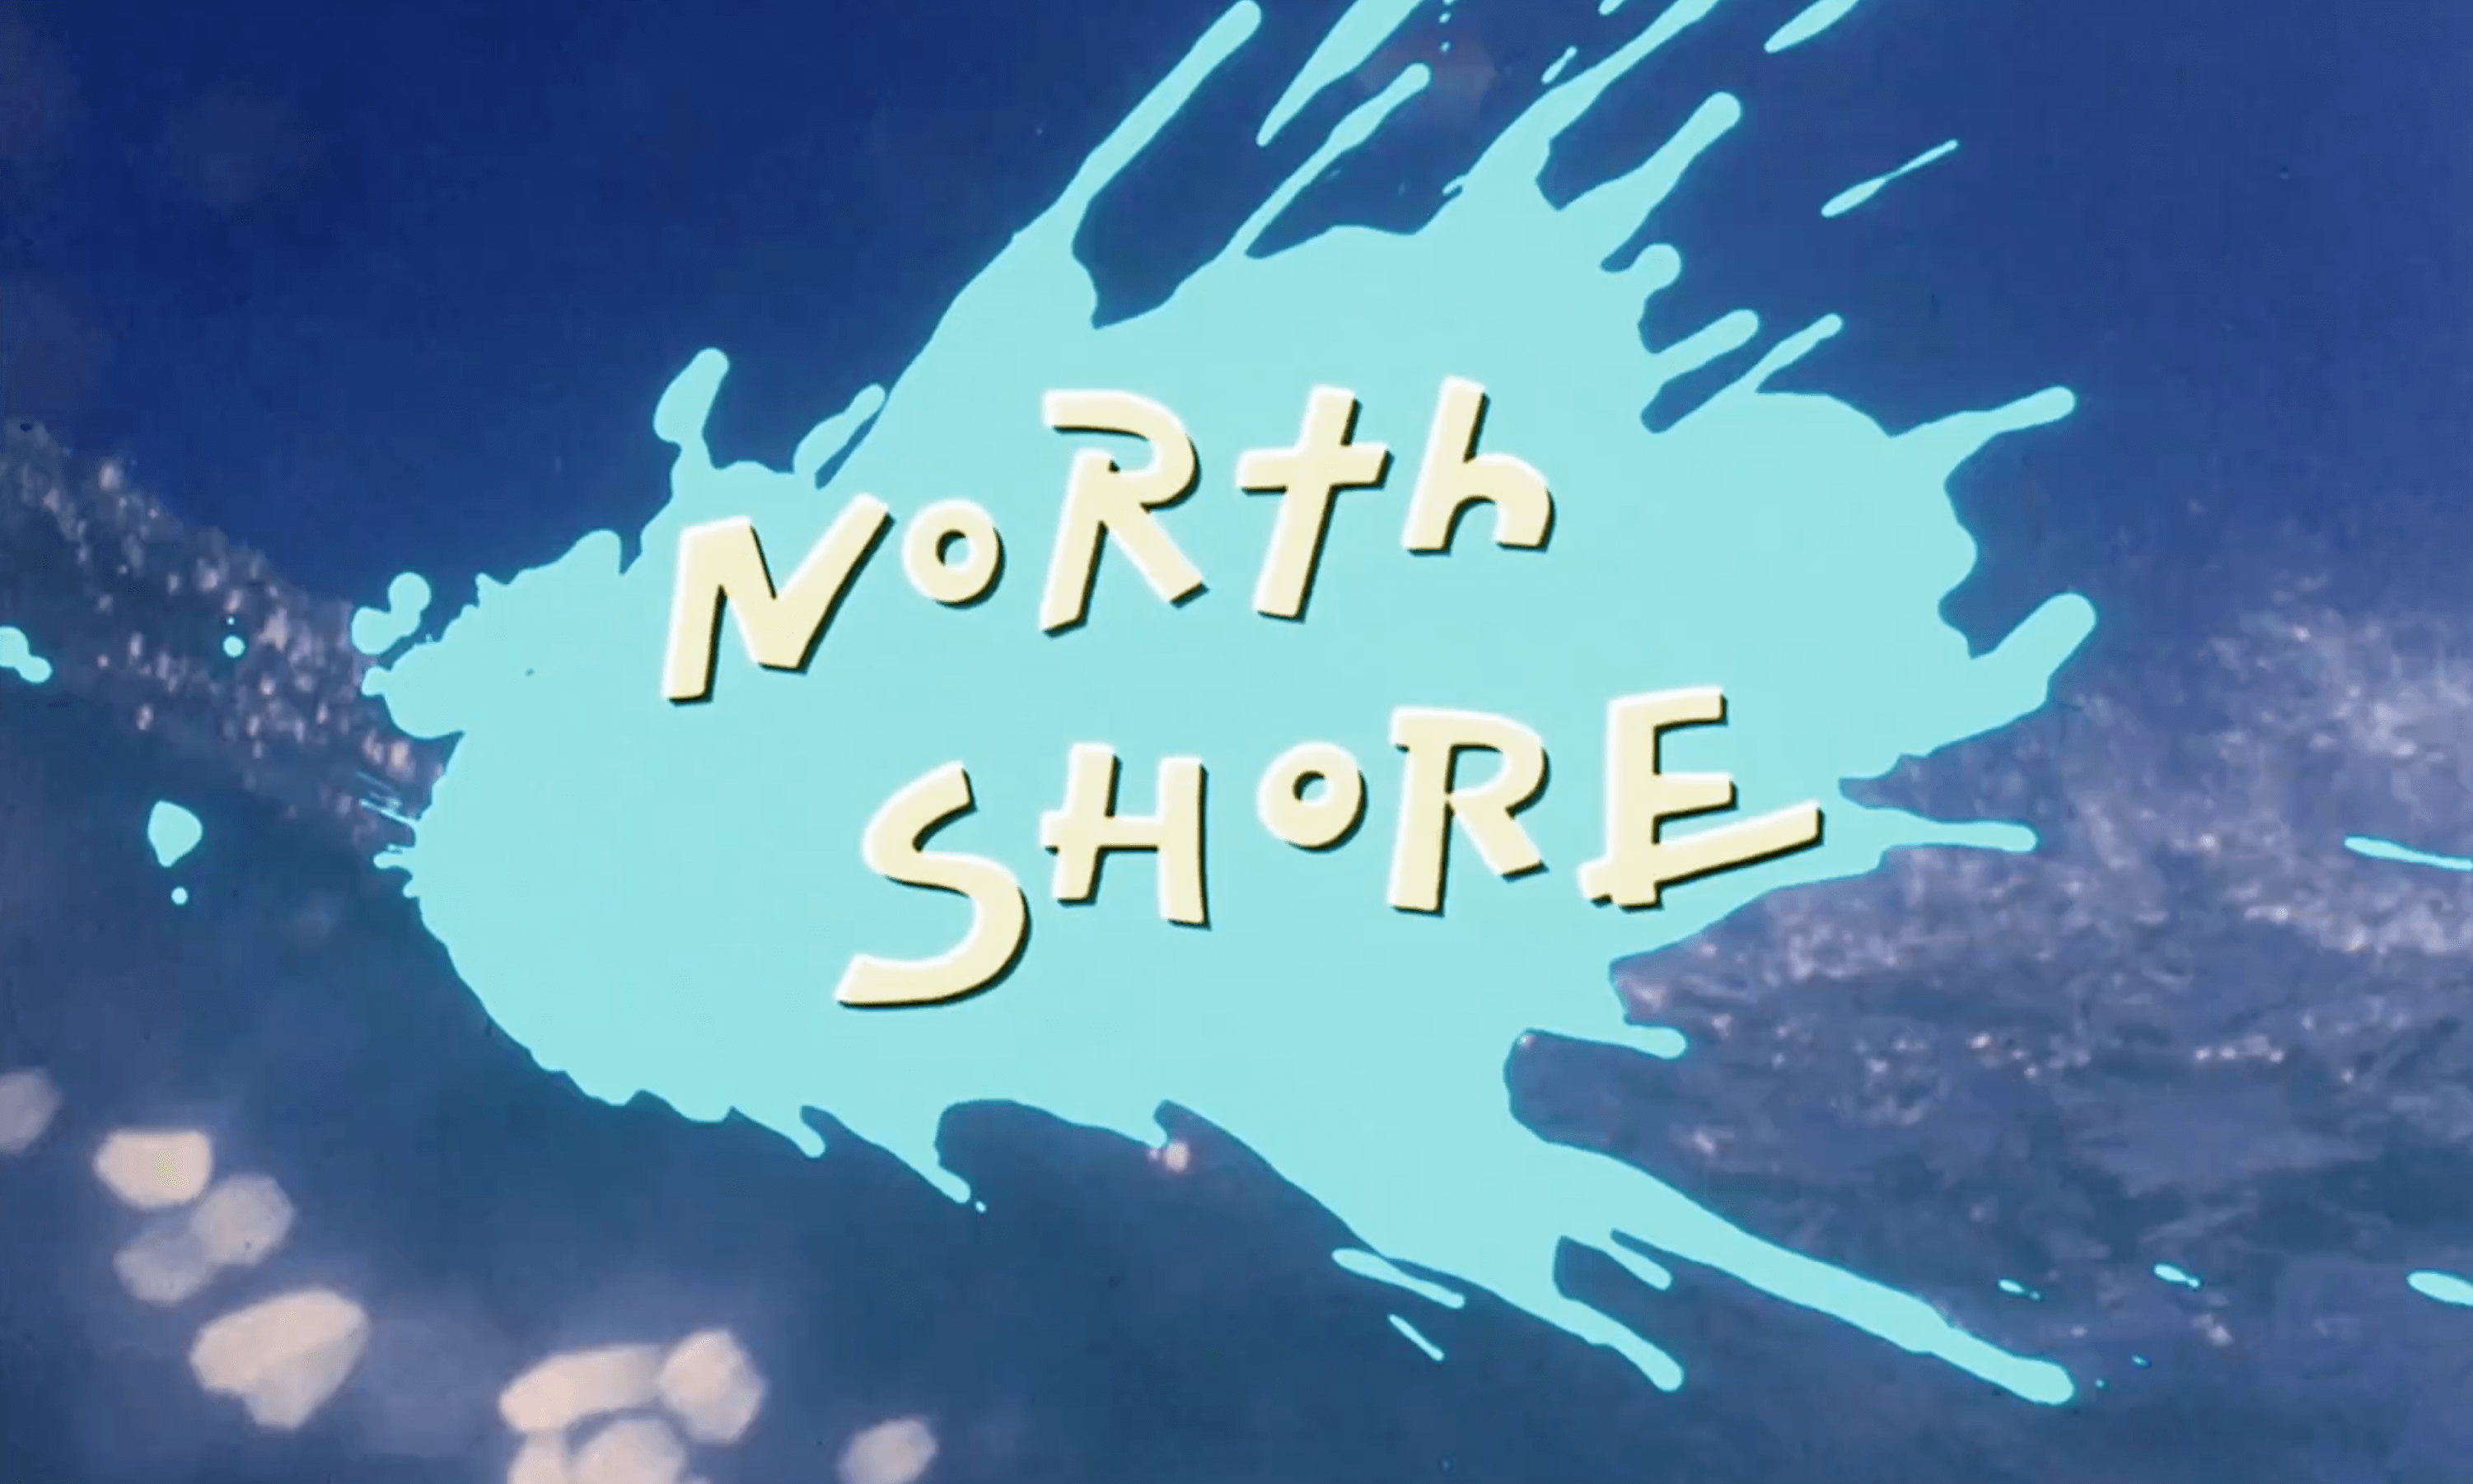 Я видел берега песня. North Shore (1987.